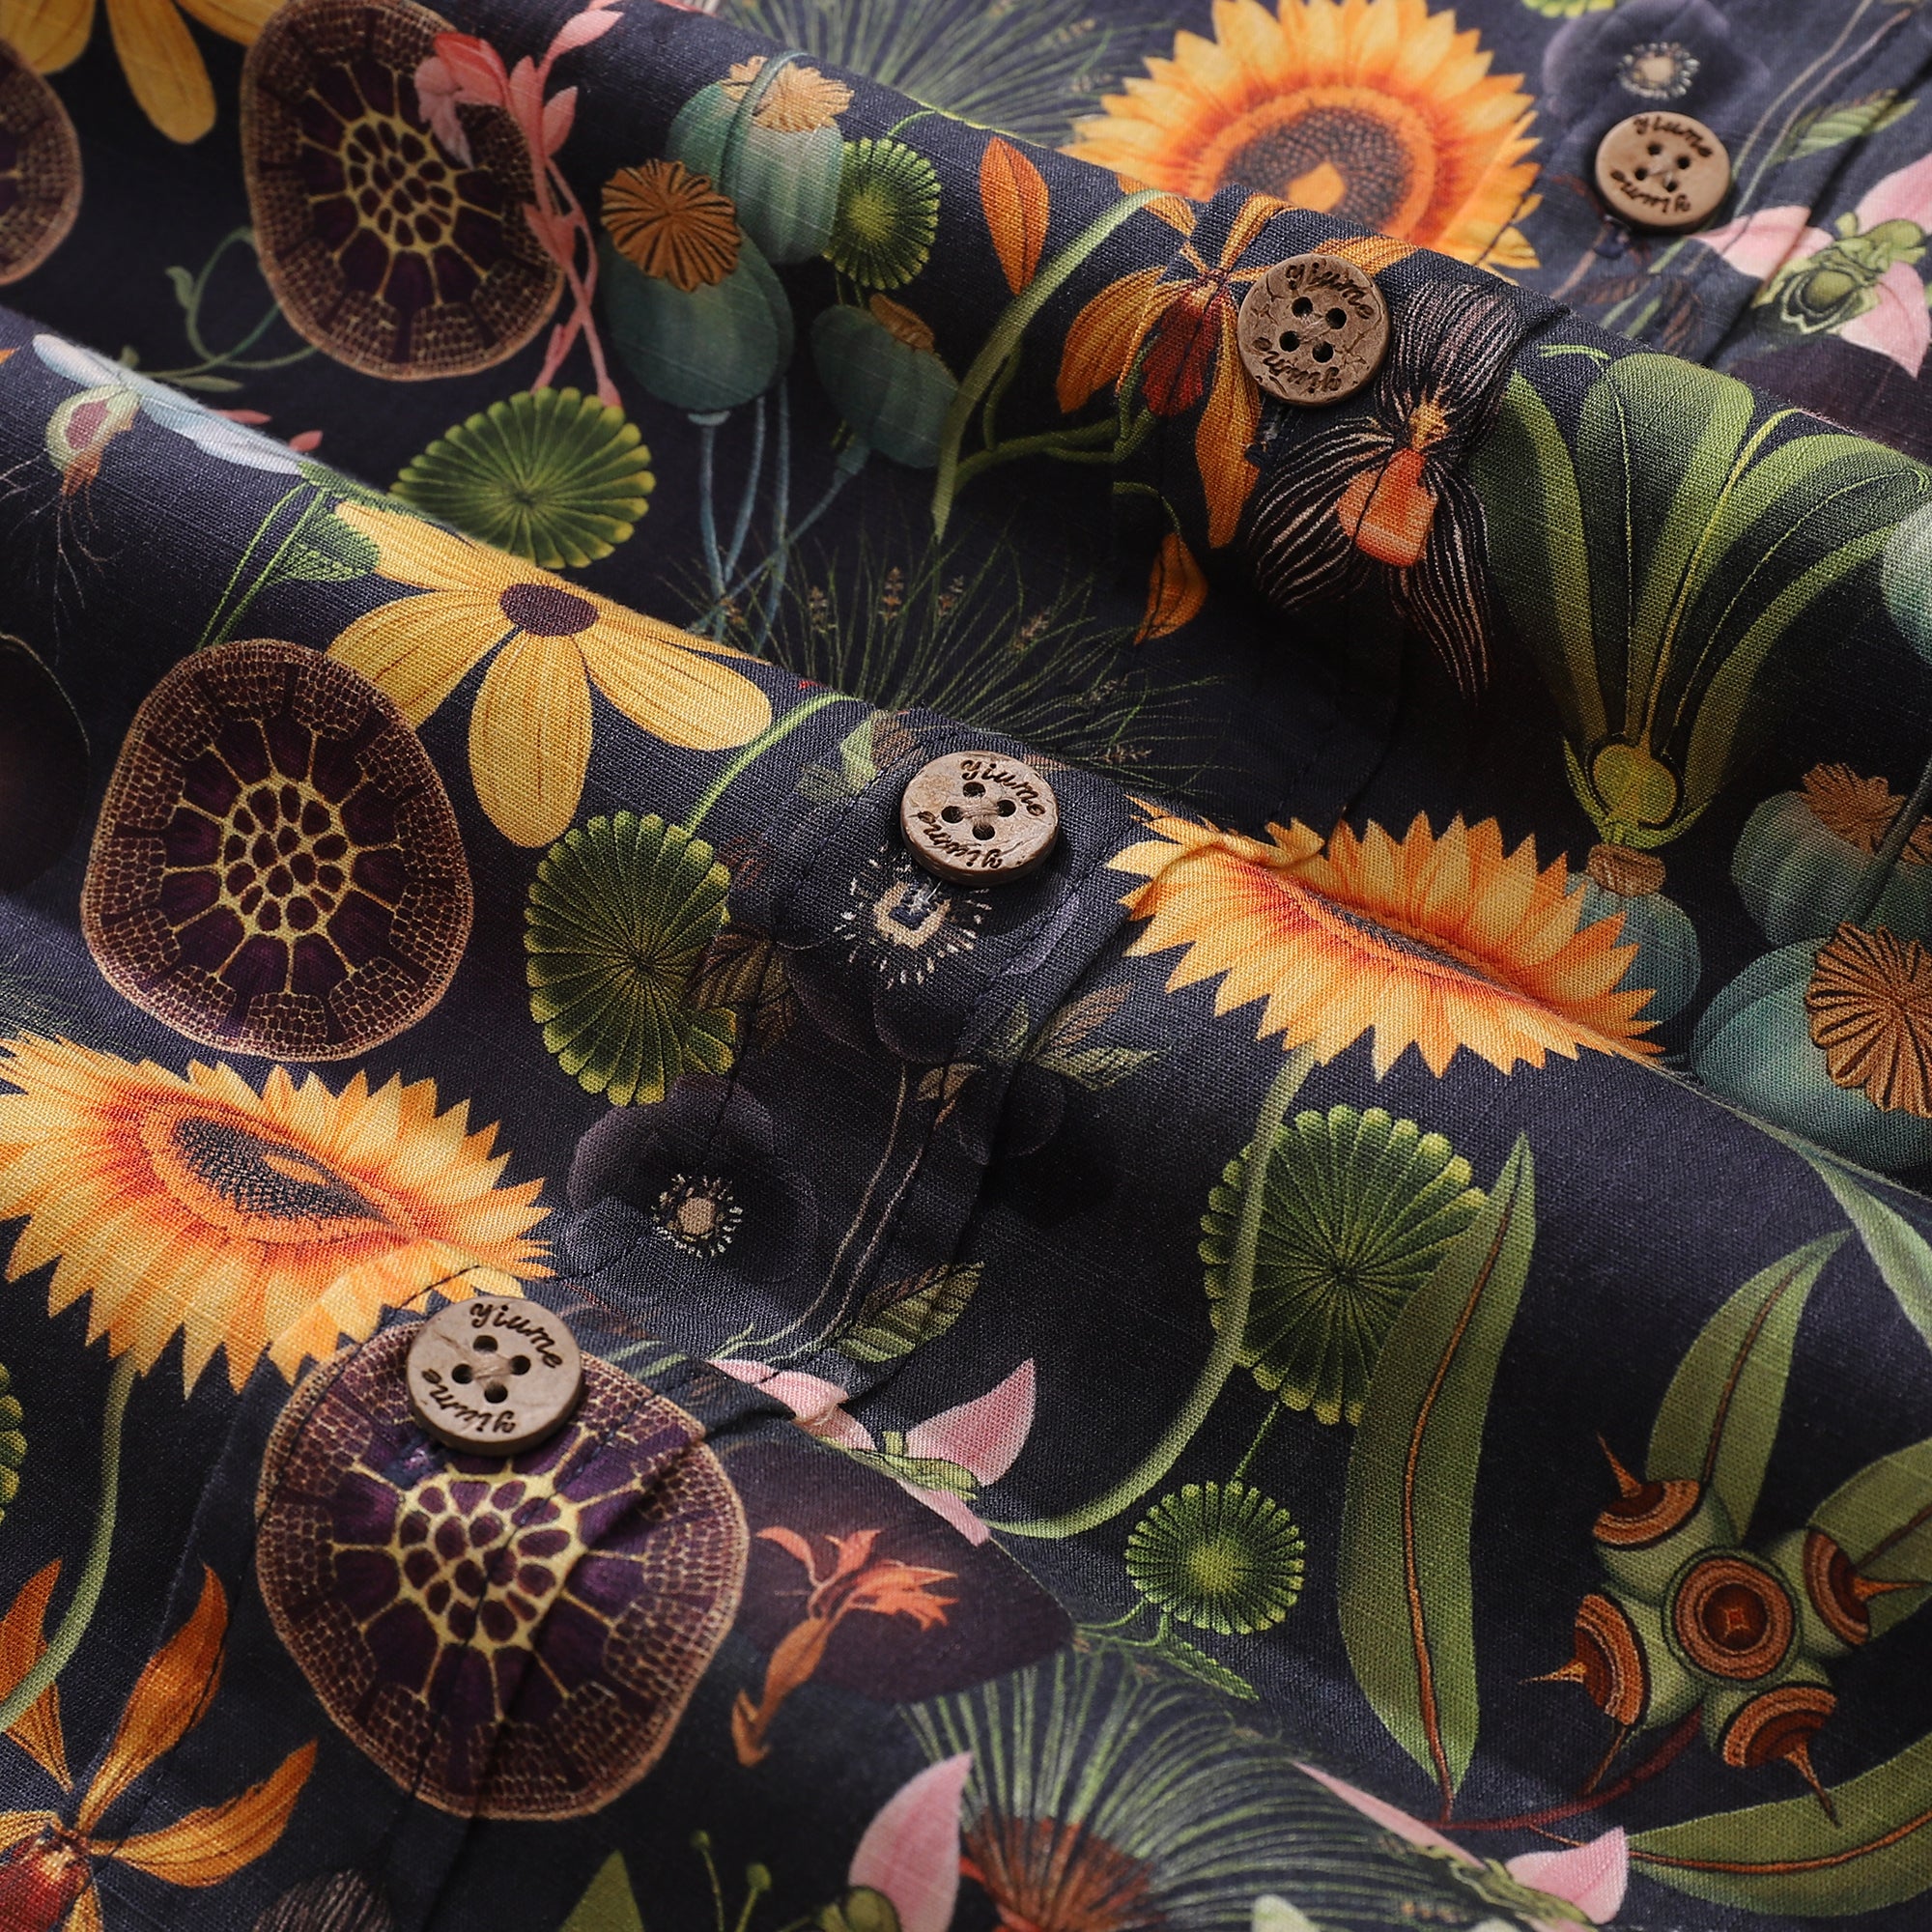 Men's Hawaiian Shirt Sunflower Serenity Cotton Button-down Short Sleeve Aloha Shirt